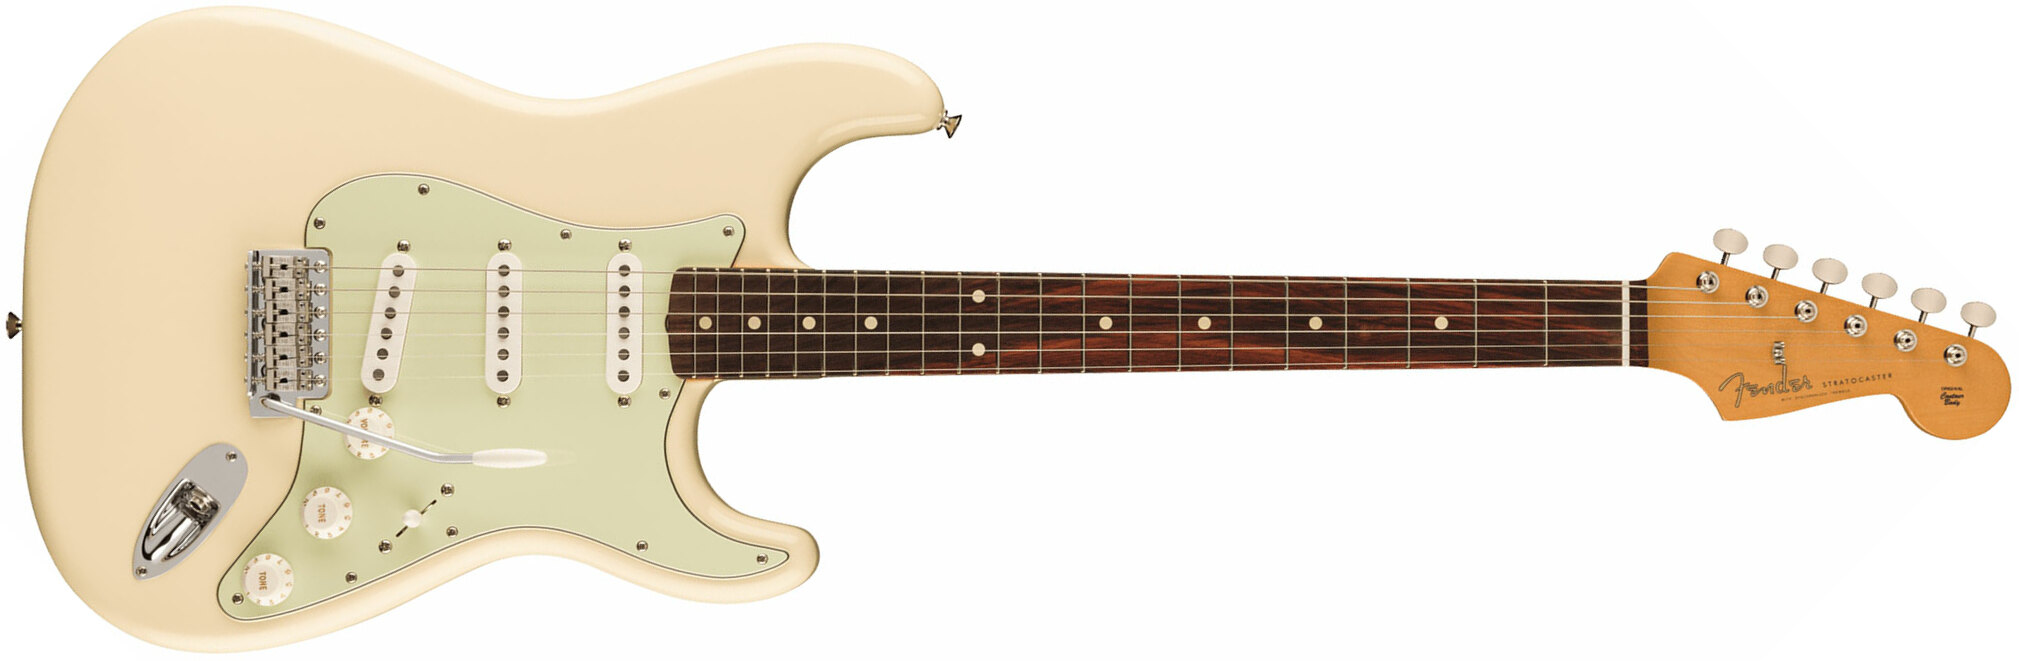 Fender Strat 60s Vintera 2 Mex 3s Trem Rw - Olympic White - Guitarra eléctrica con forma de str. - Main picture